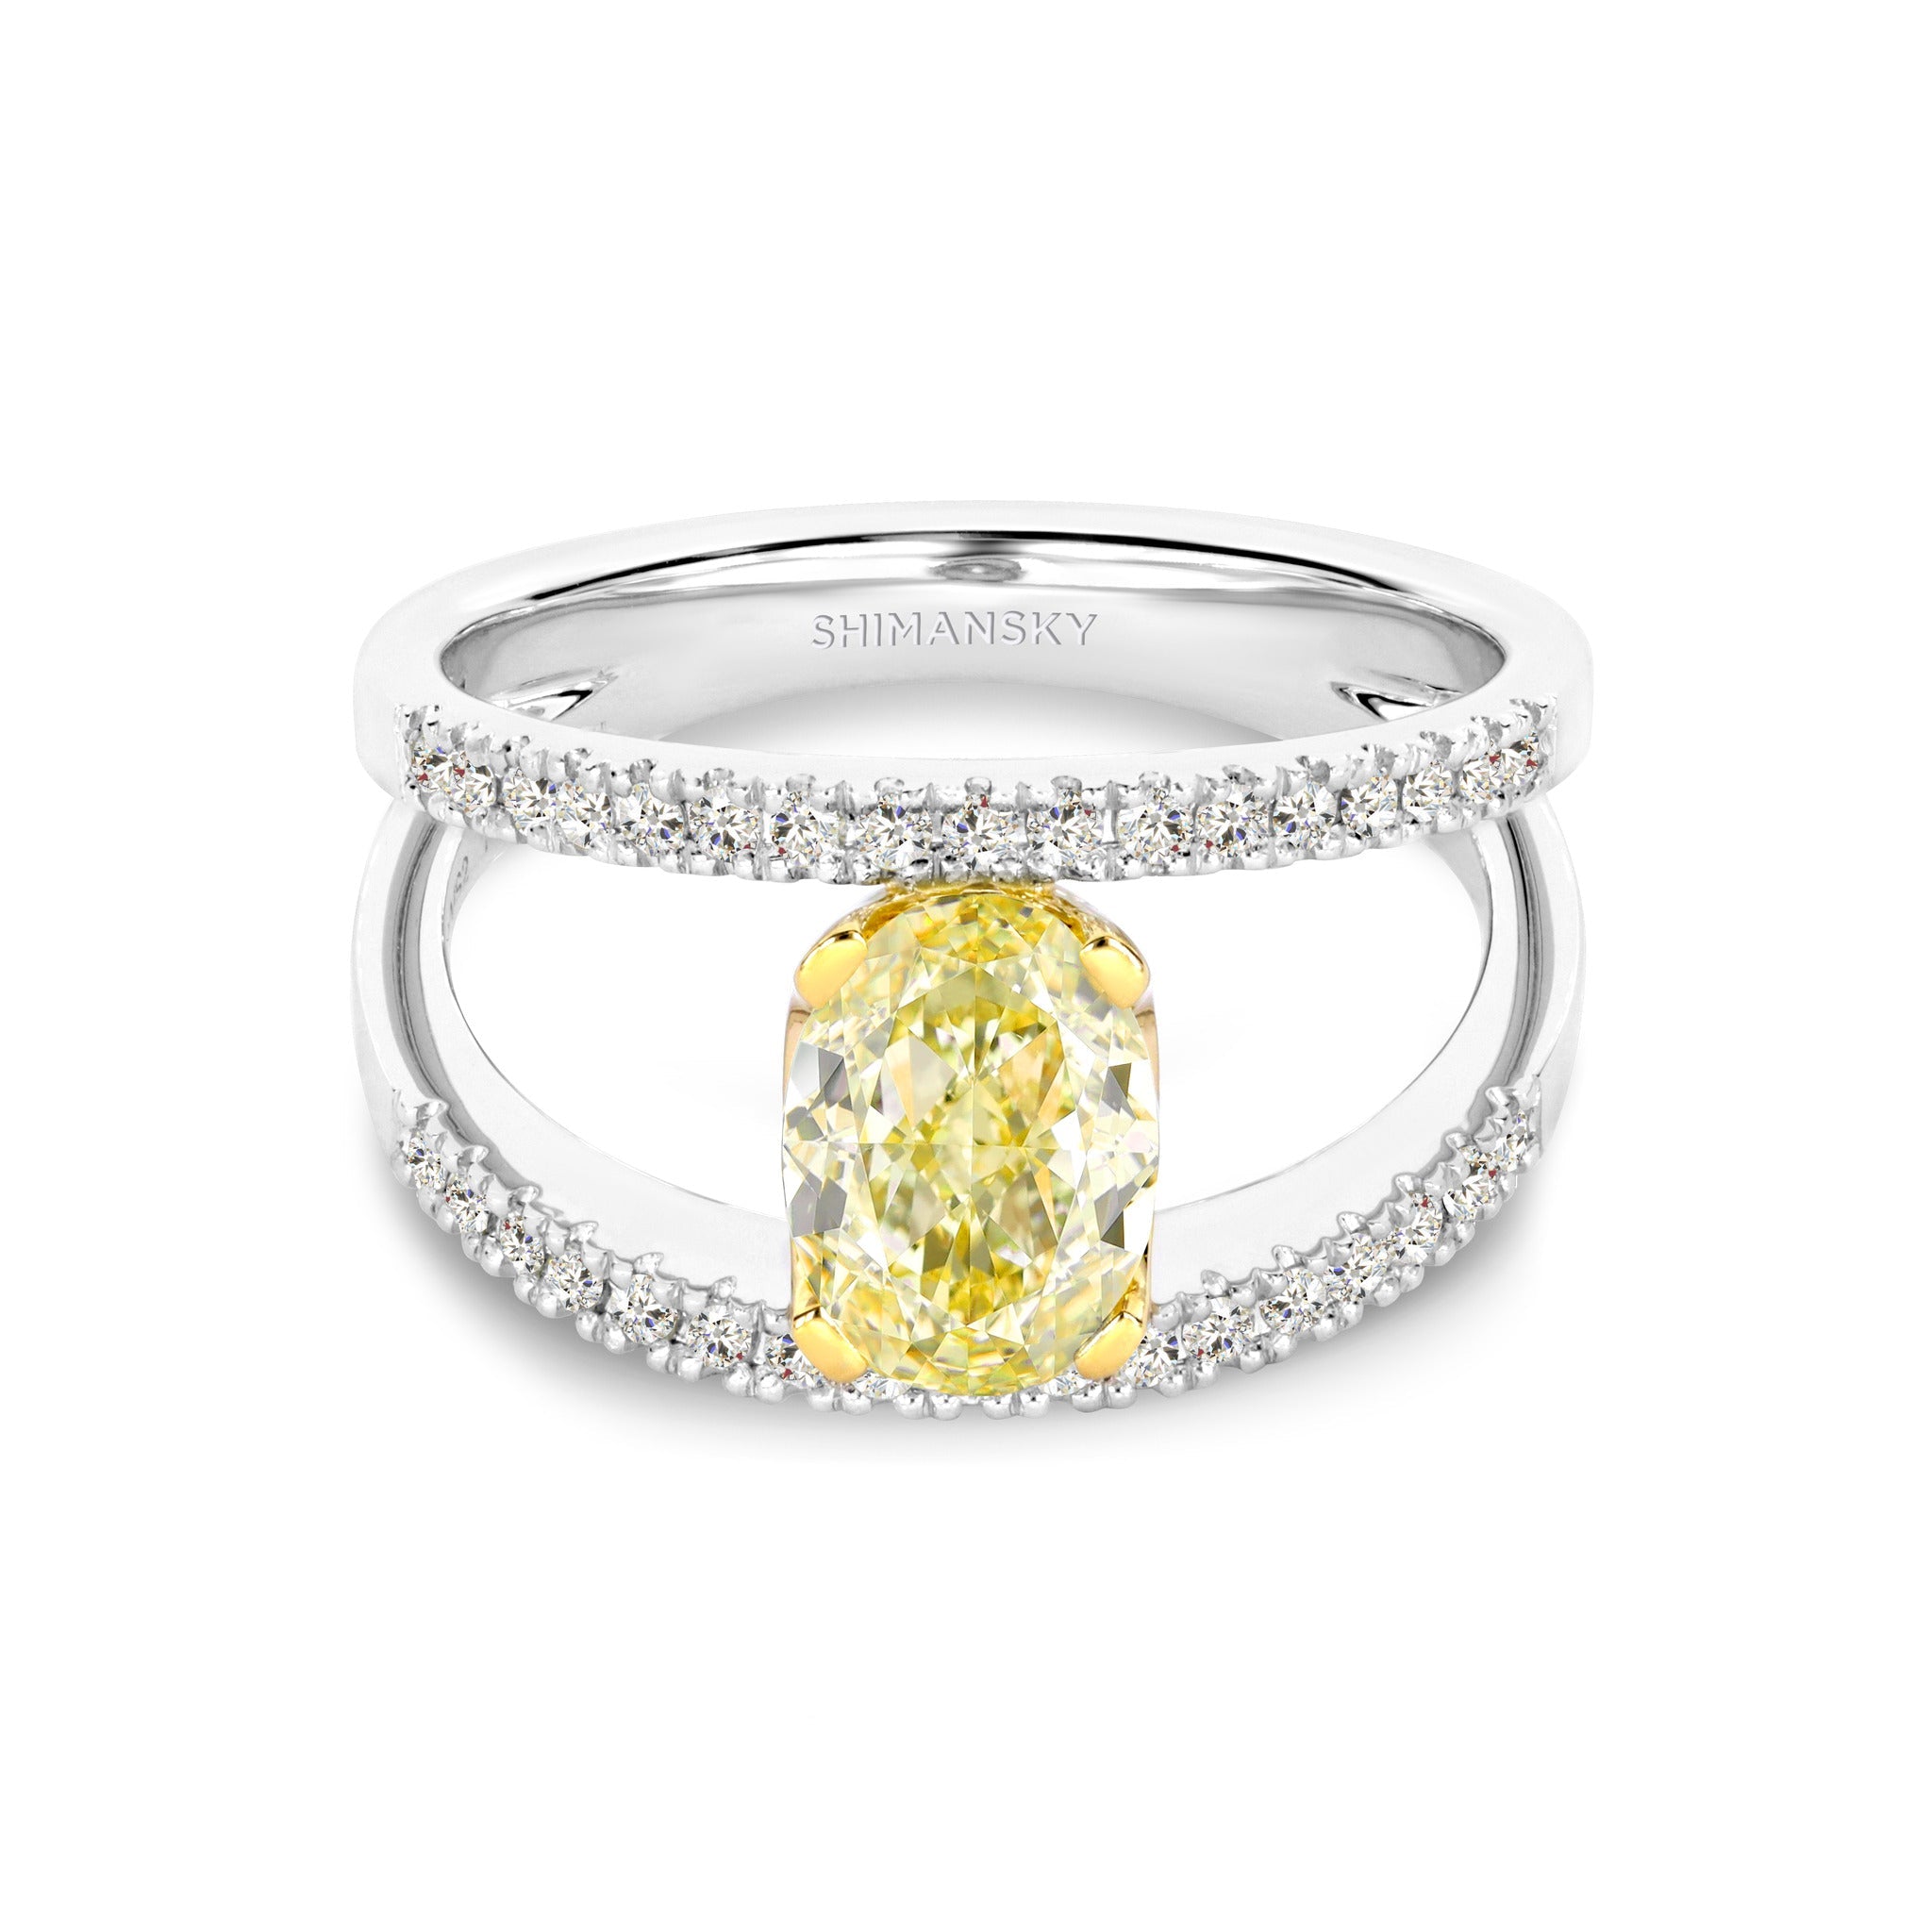 1.6 TCW Millennium Diamond Engagement Ring Front View - Shimansky